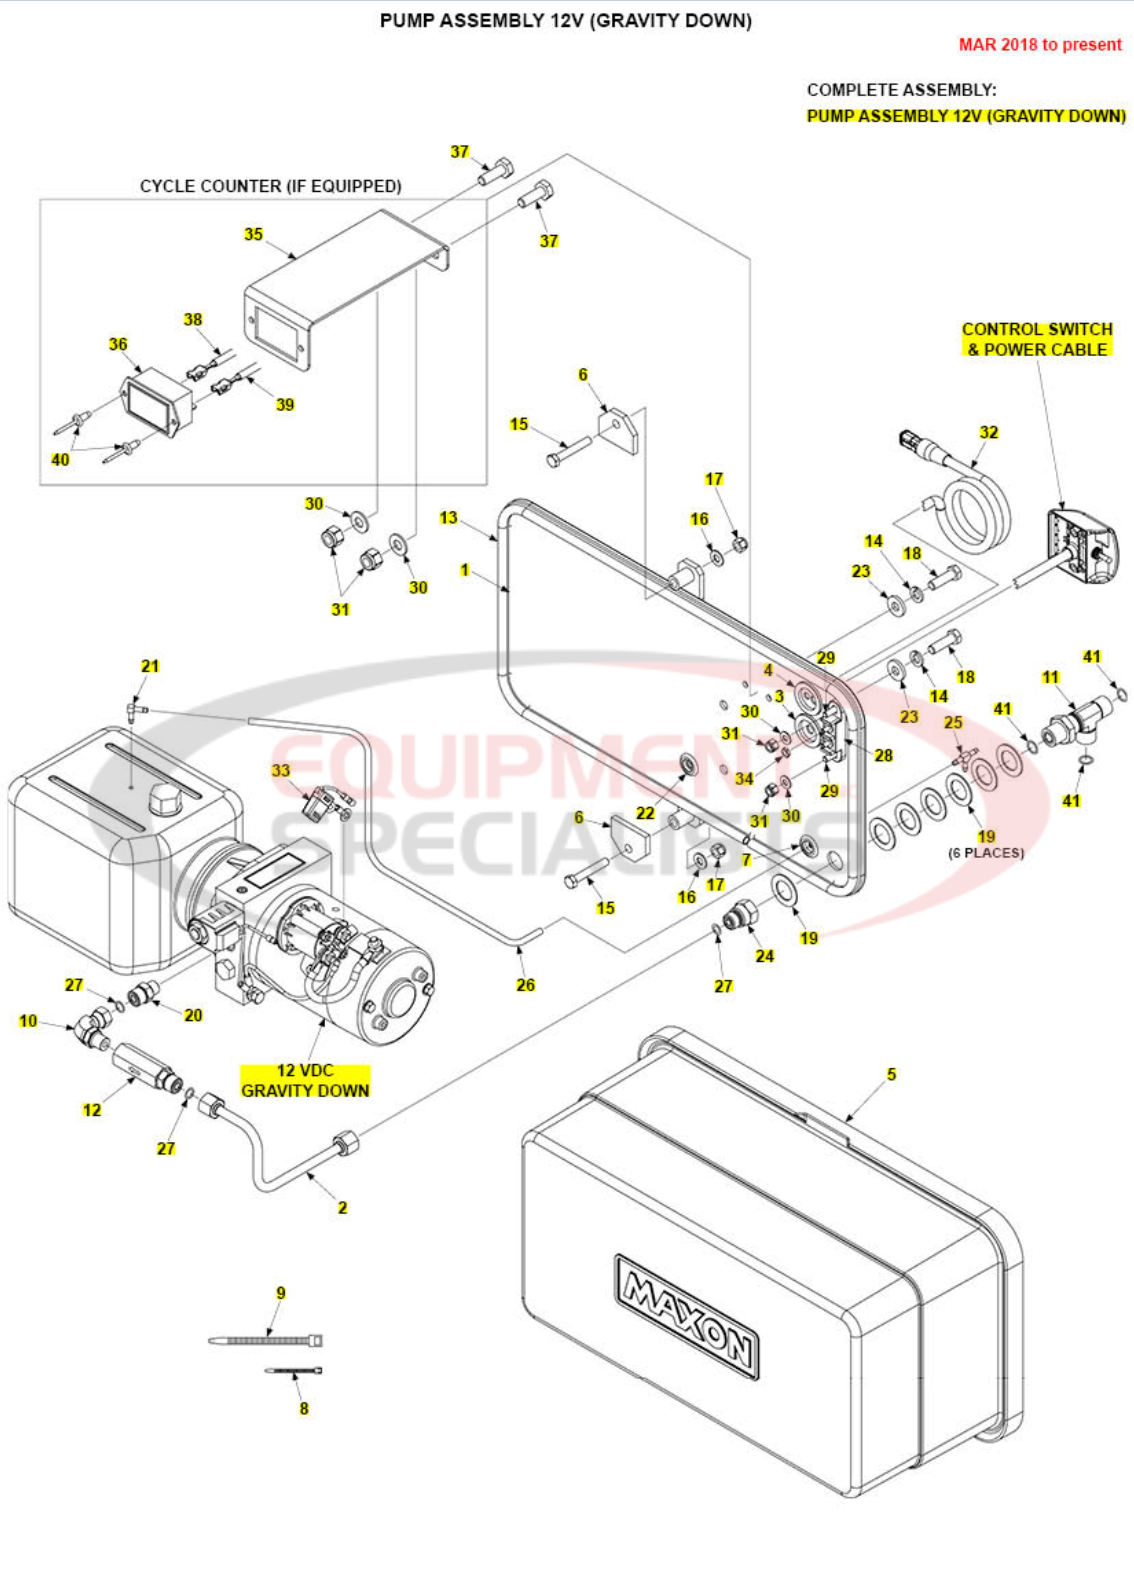 Maxon TE-33 Pump Assembly 12V Gravity Down Mar 2018 to Present Parts Diagram Breakdown Diagram